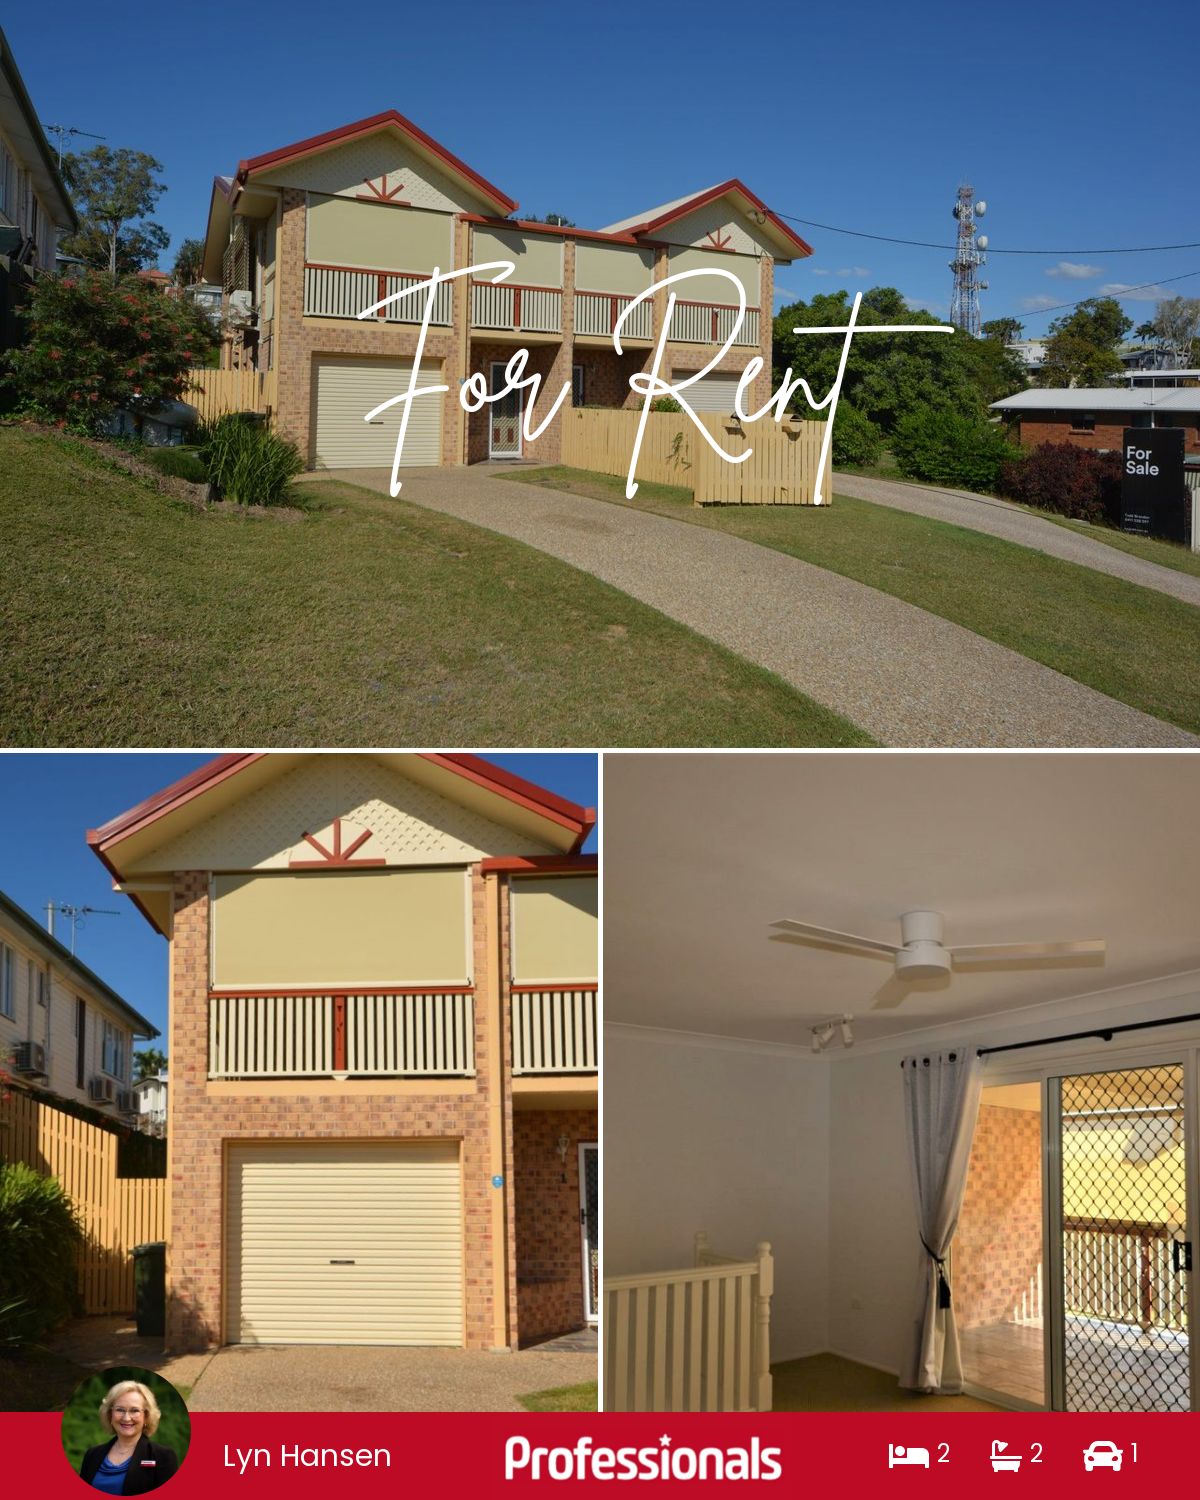 1/11 Jeffries Street, The Range, QLD 4700 | Realty.com.au